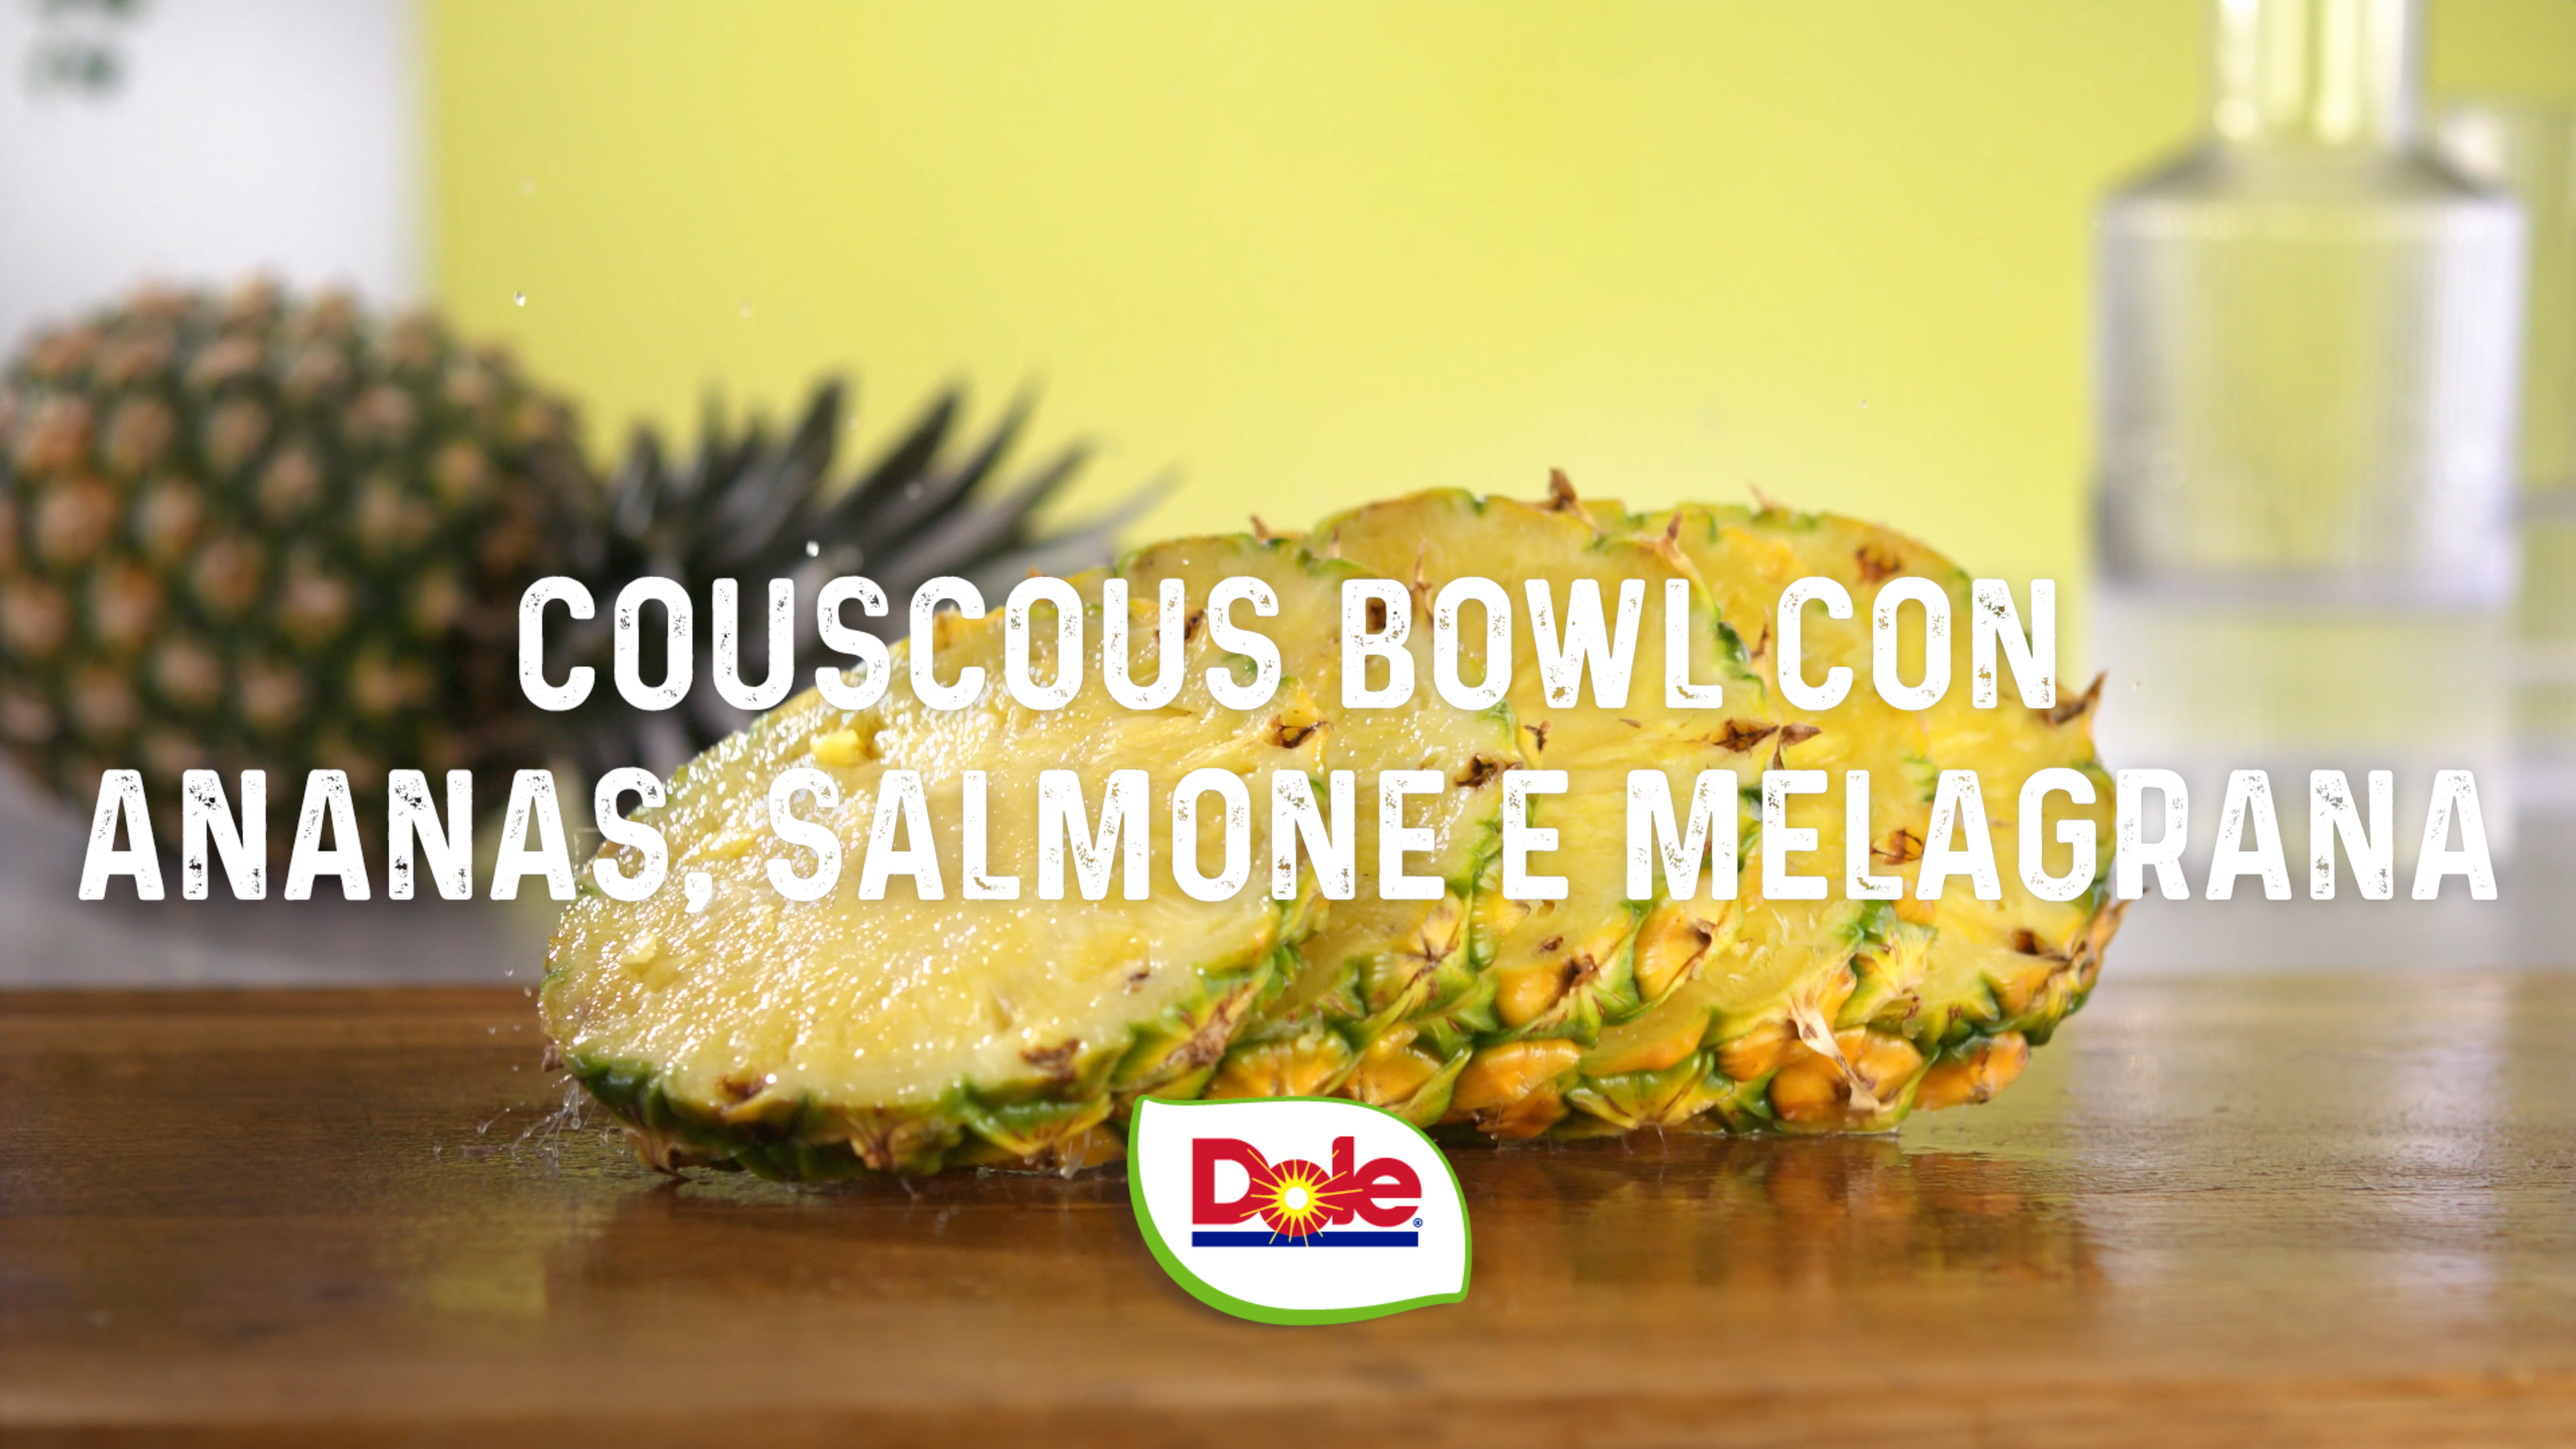 Couscous bowl con ananas, salmone e melagrana